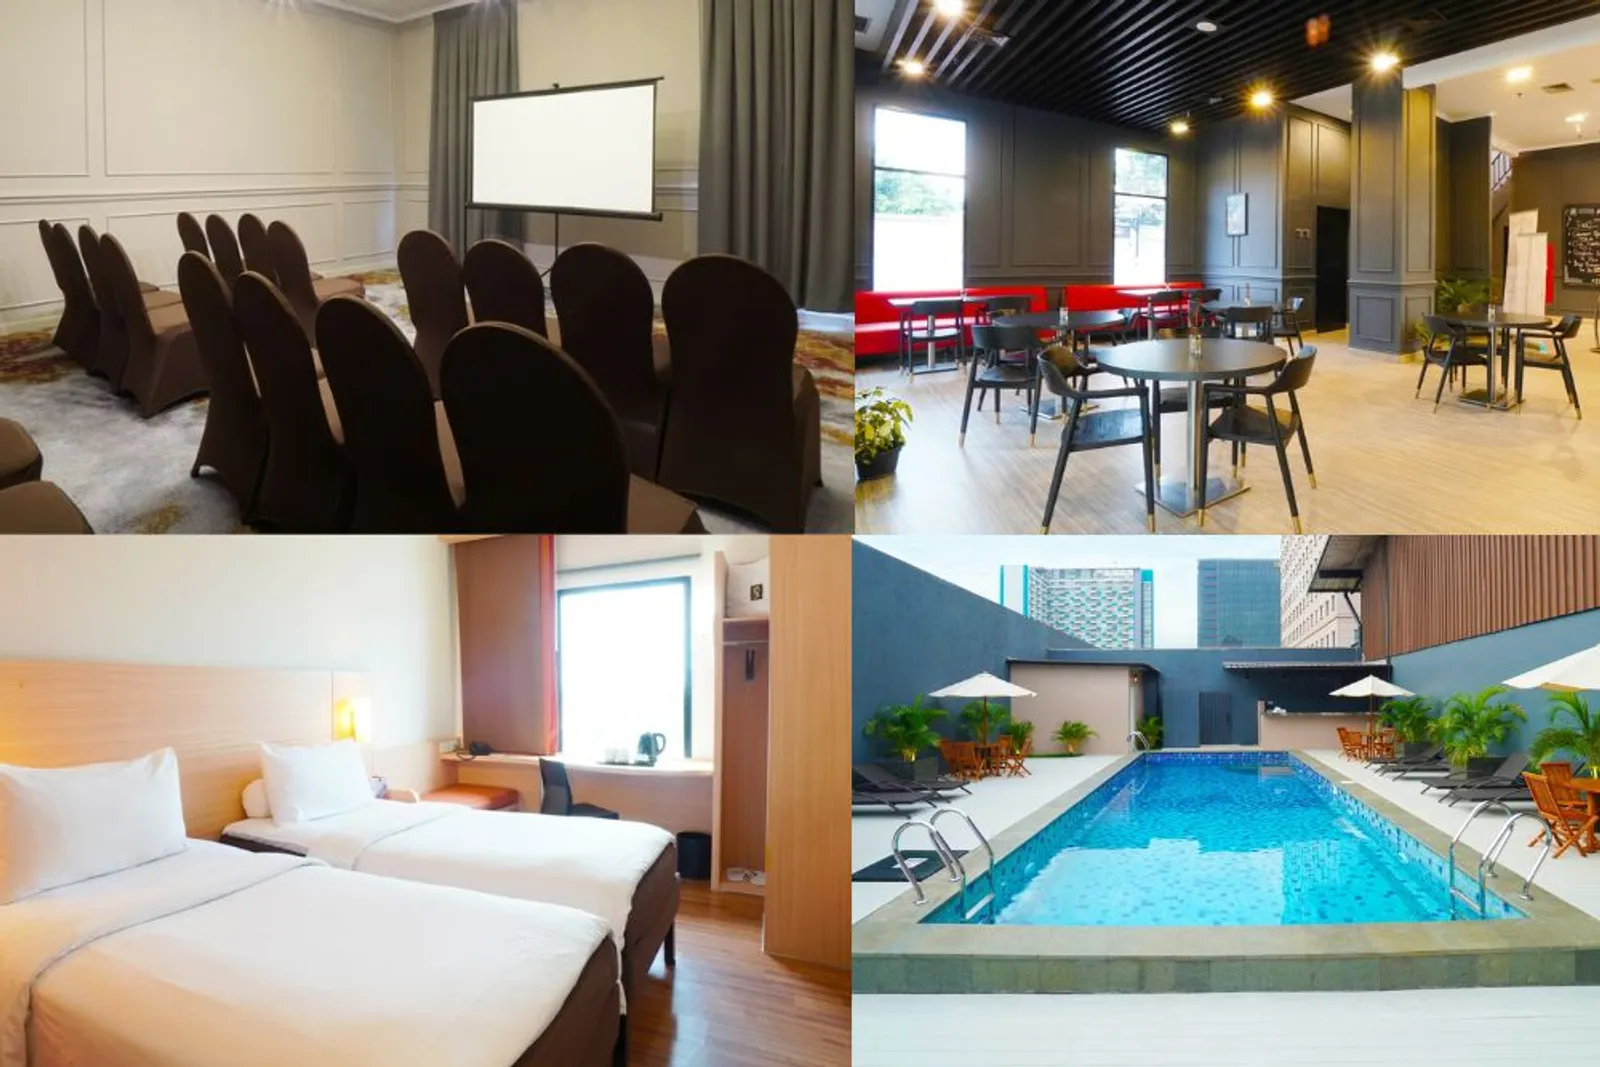 9 Rekomendasi Hotel Murah Jakarta Timur, Di Bawah Rp500 Ribu